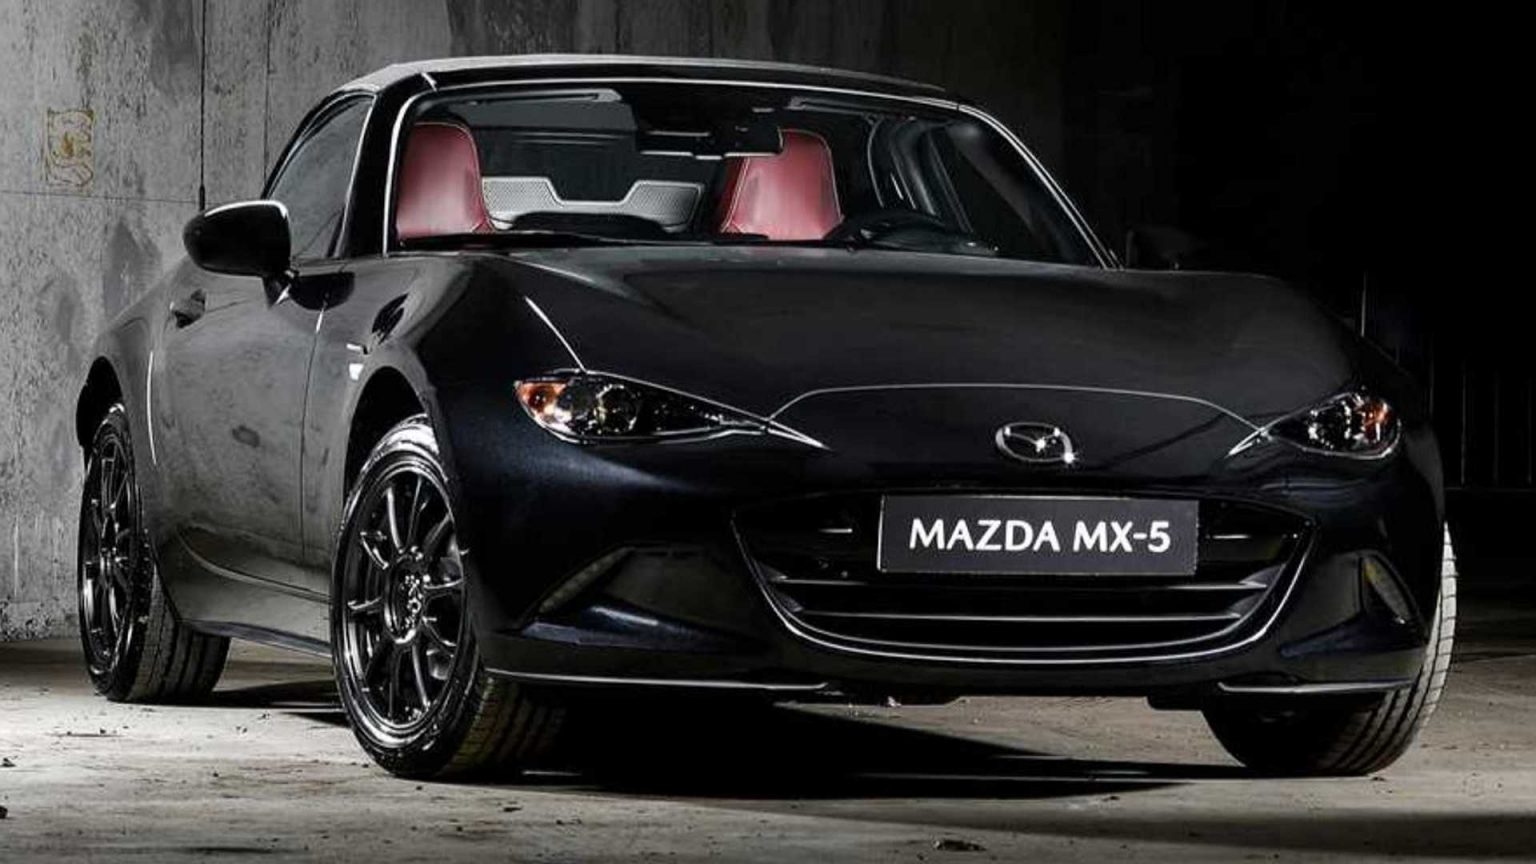 Mazda MX-5 Eunos Edition ปลุกโรดสเตอร์ในอดีต มาขายอีกครั้ง